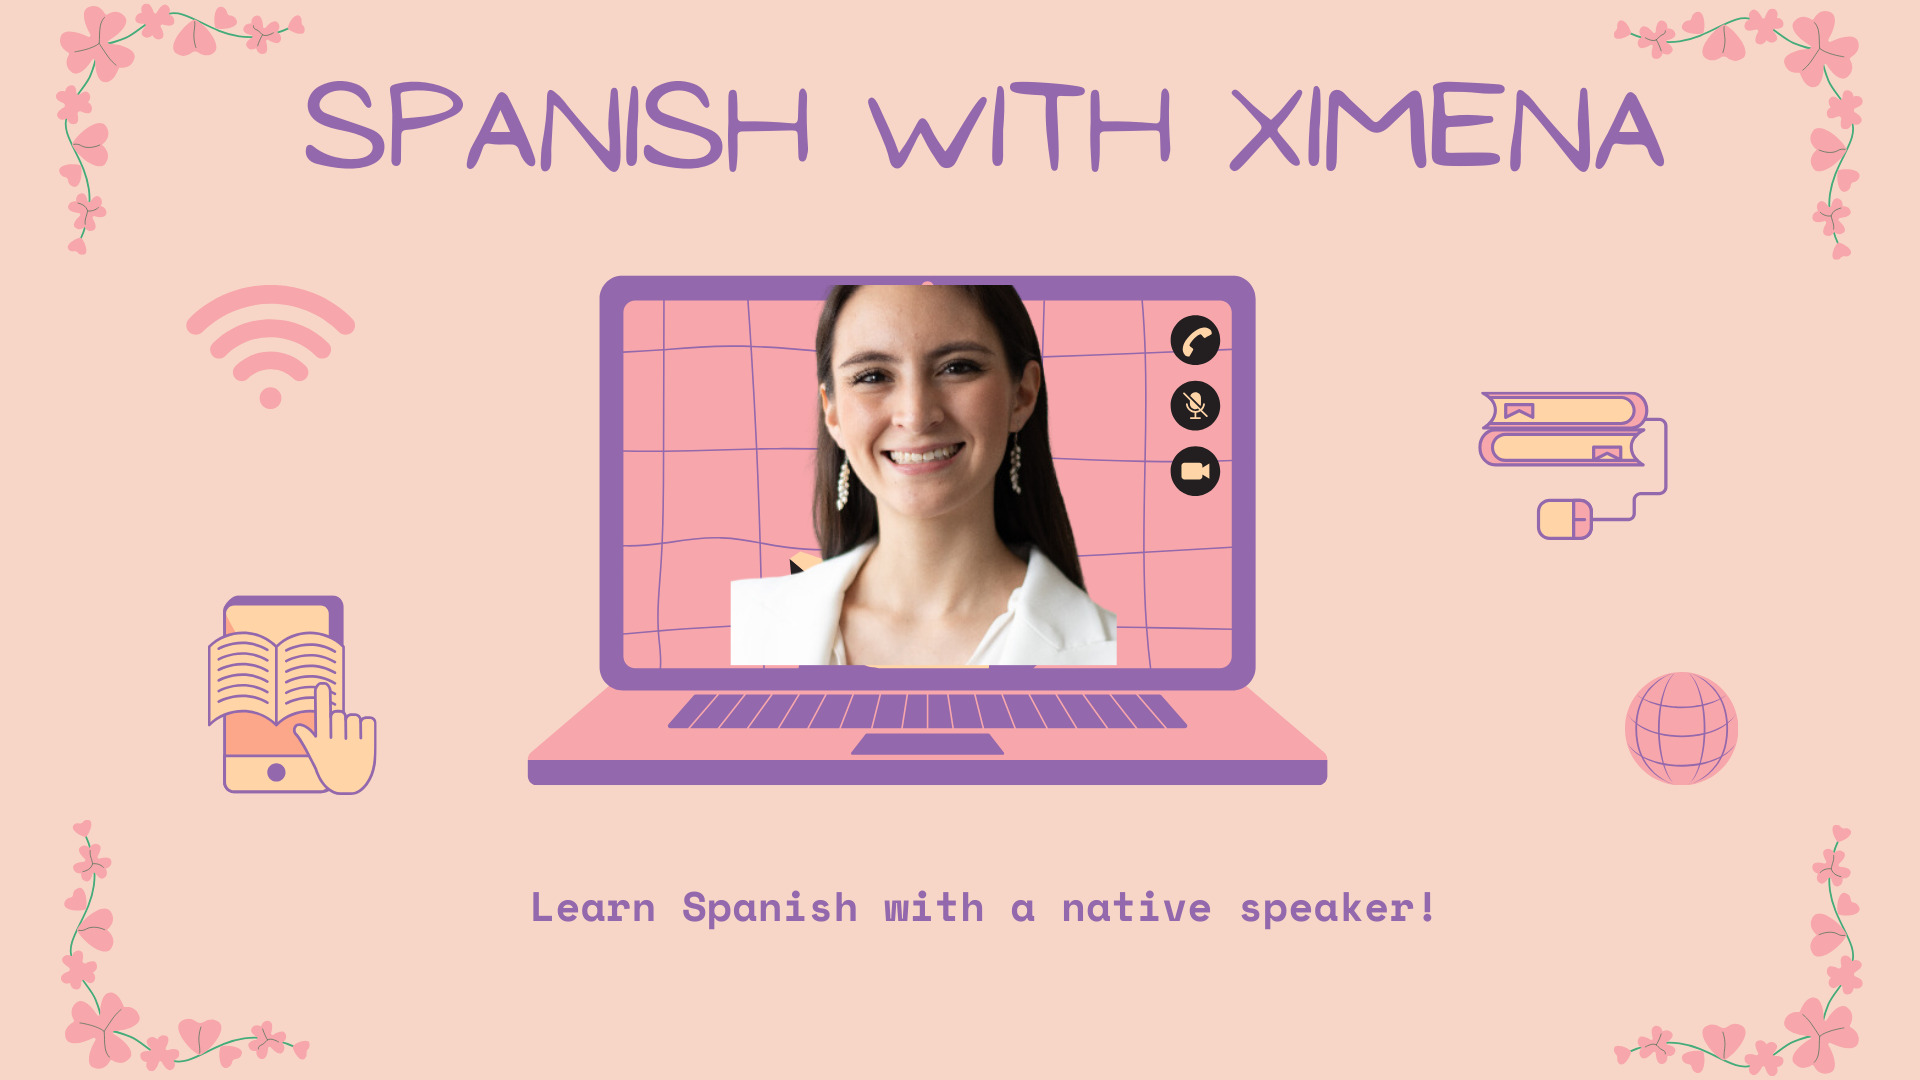 Spanish with Ximena!